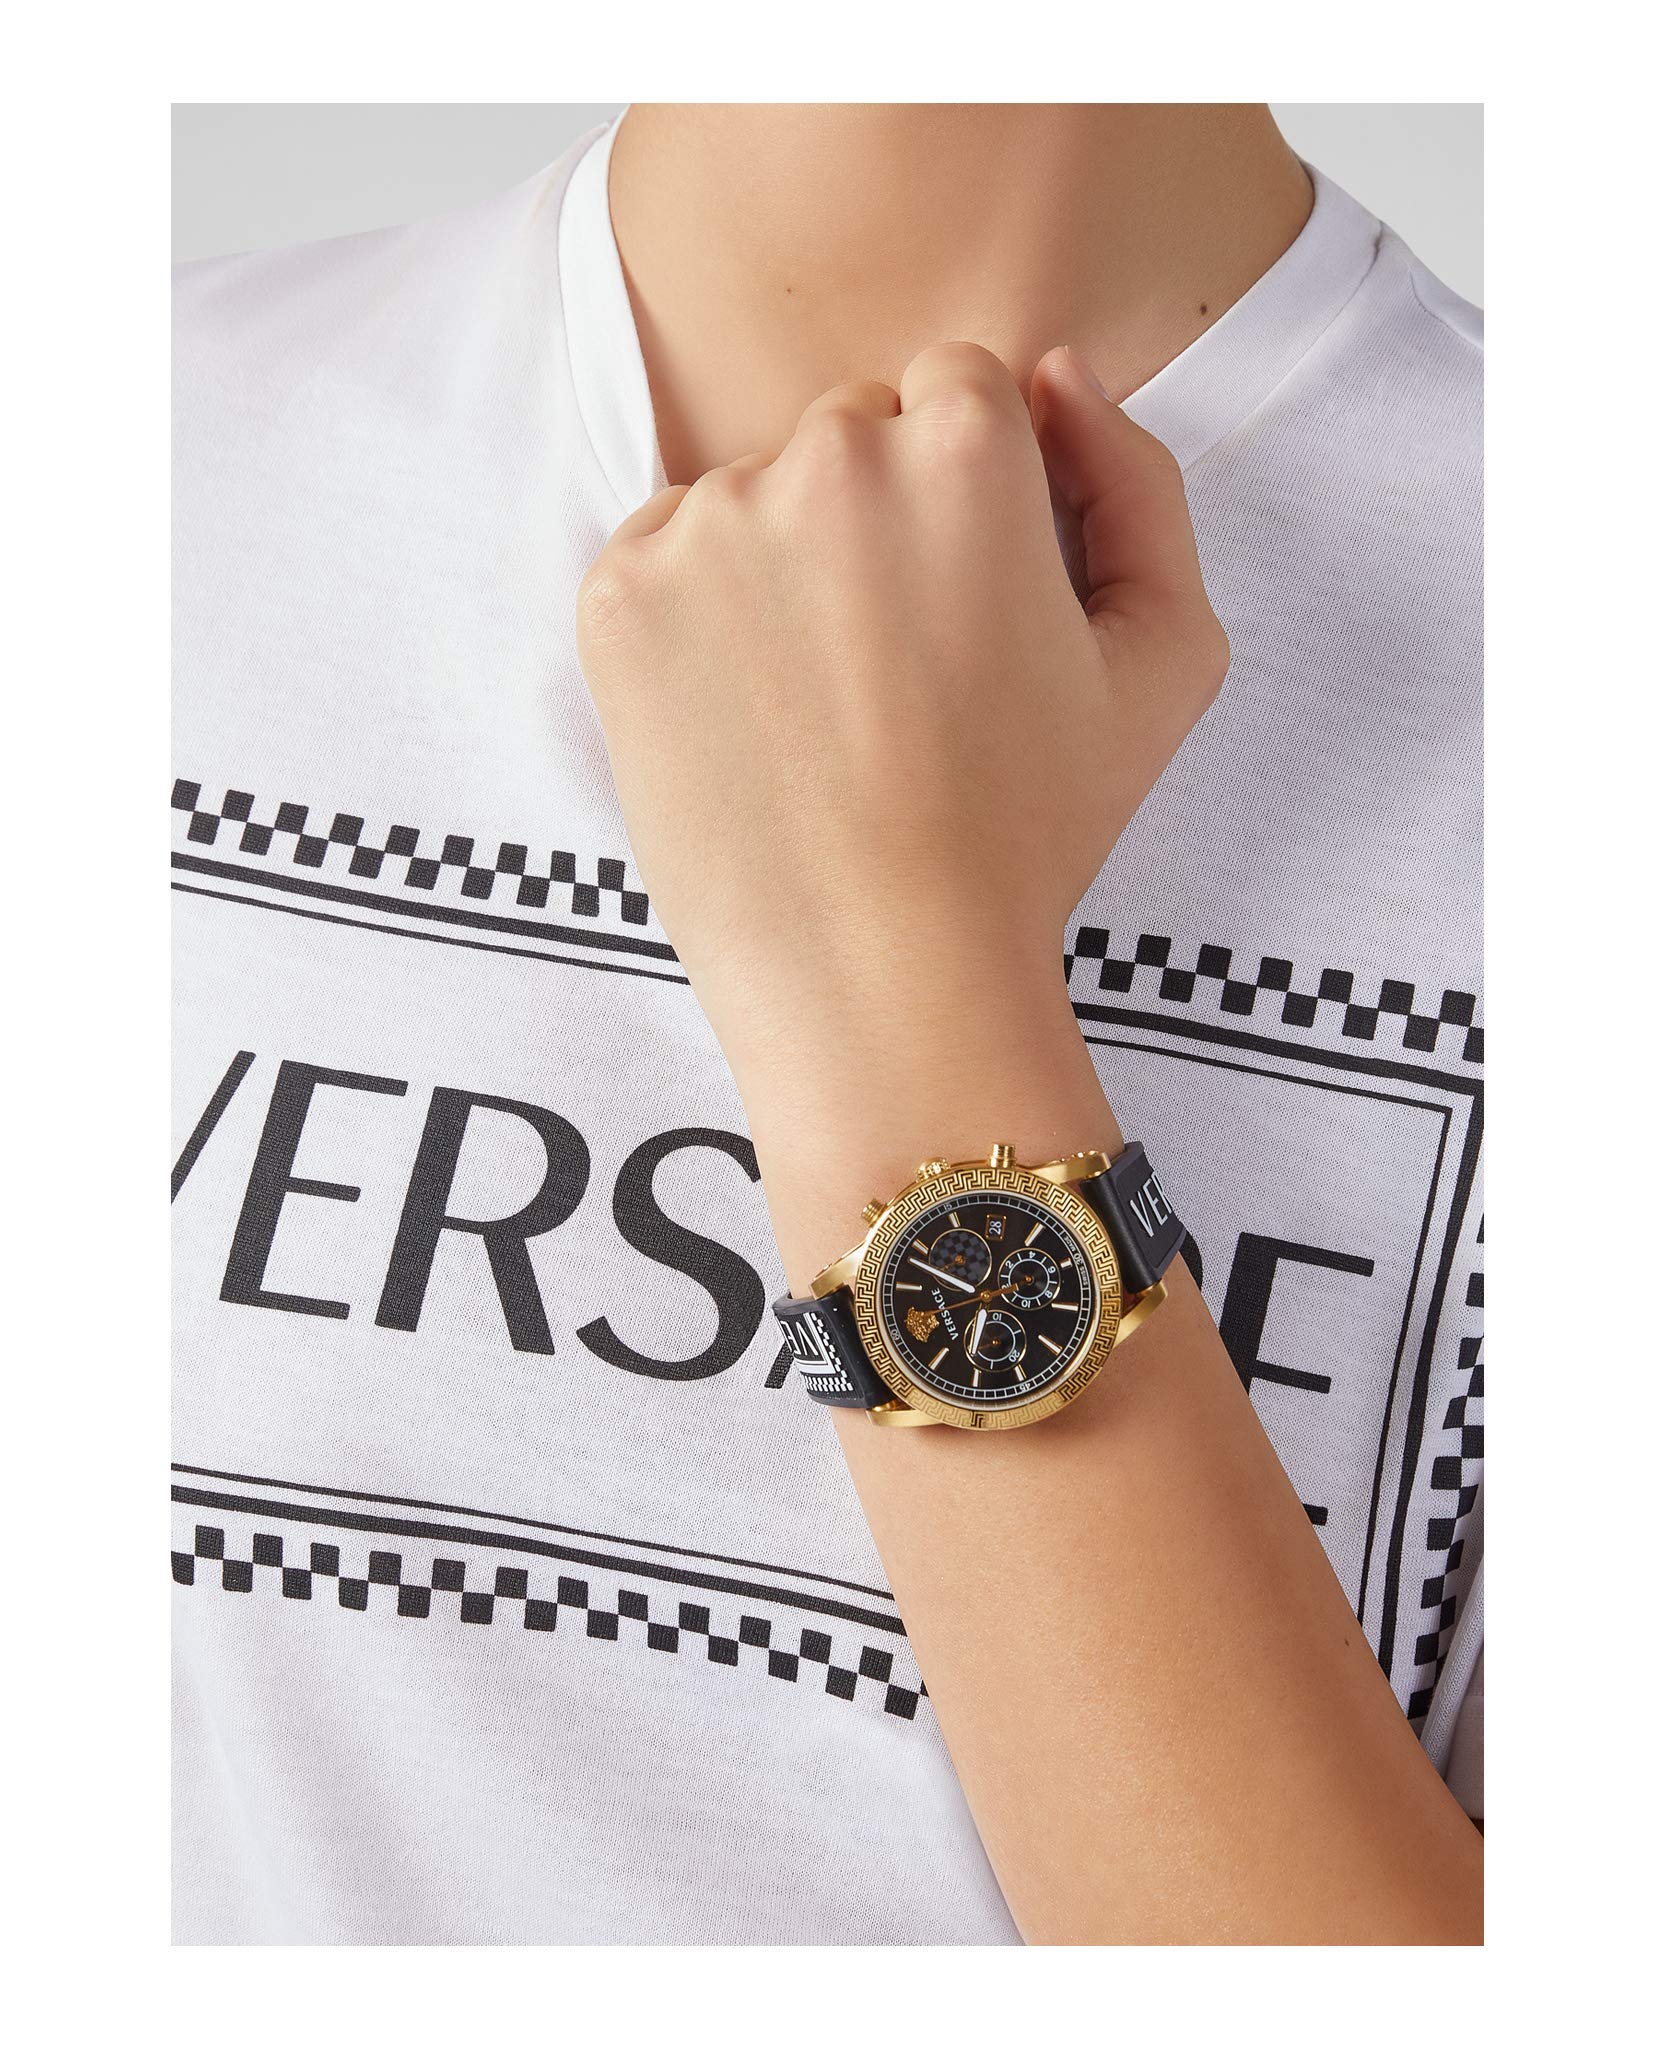 Versace Sports Tech Chronograph Black Dial Black Rubber Strap Watch for Men - VELT00119